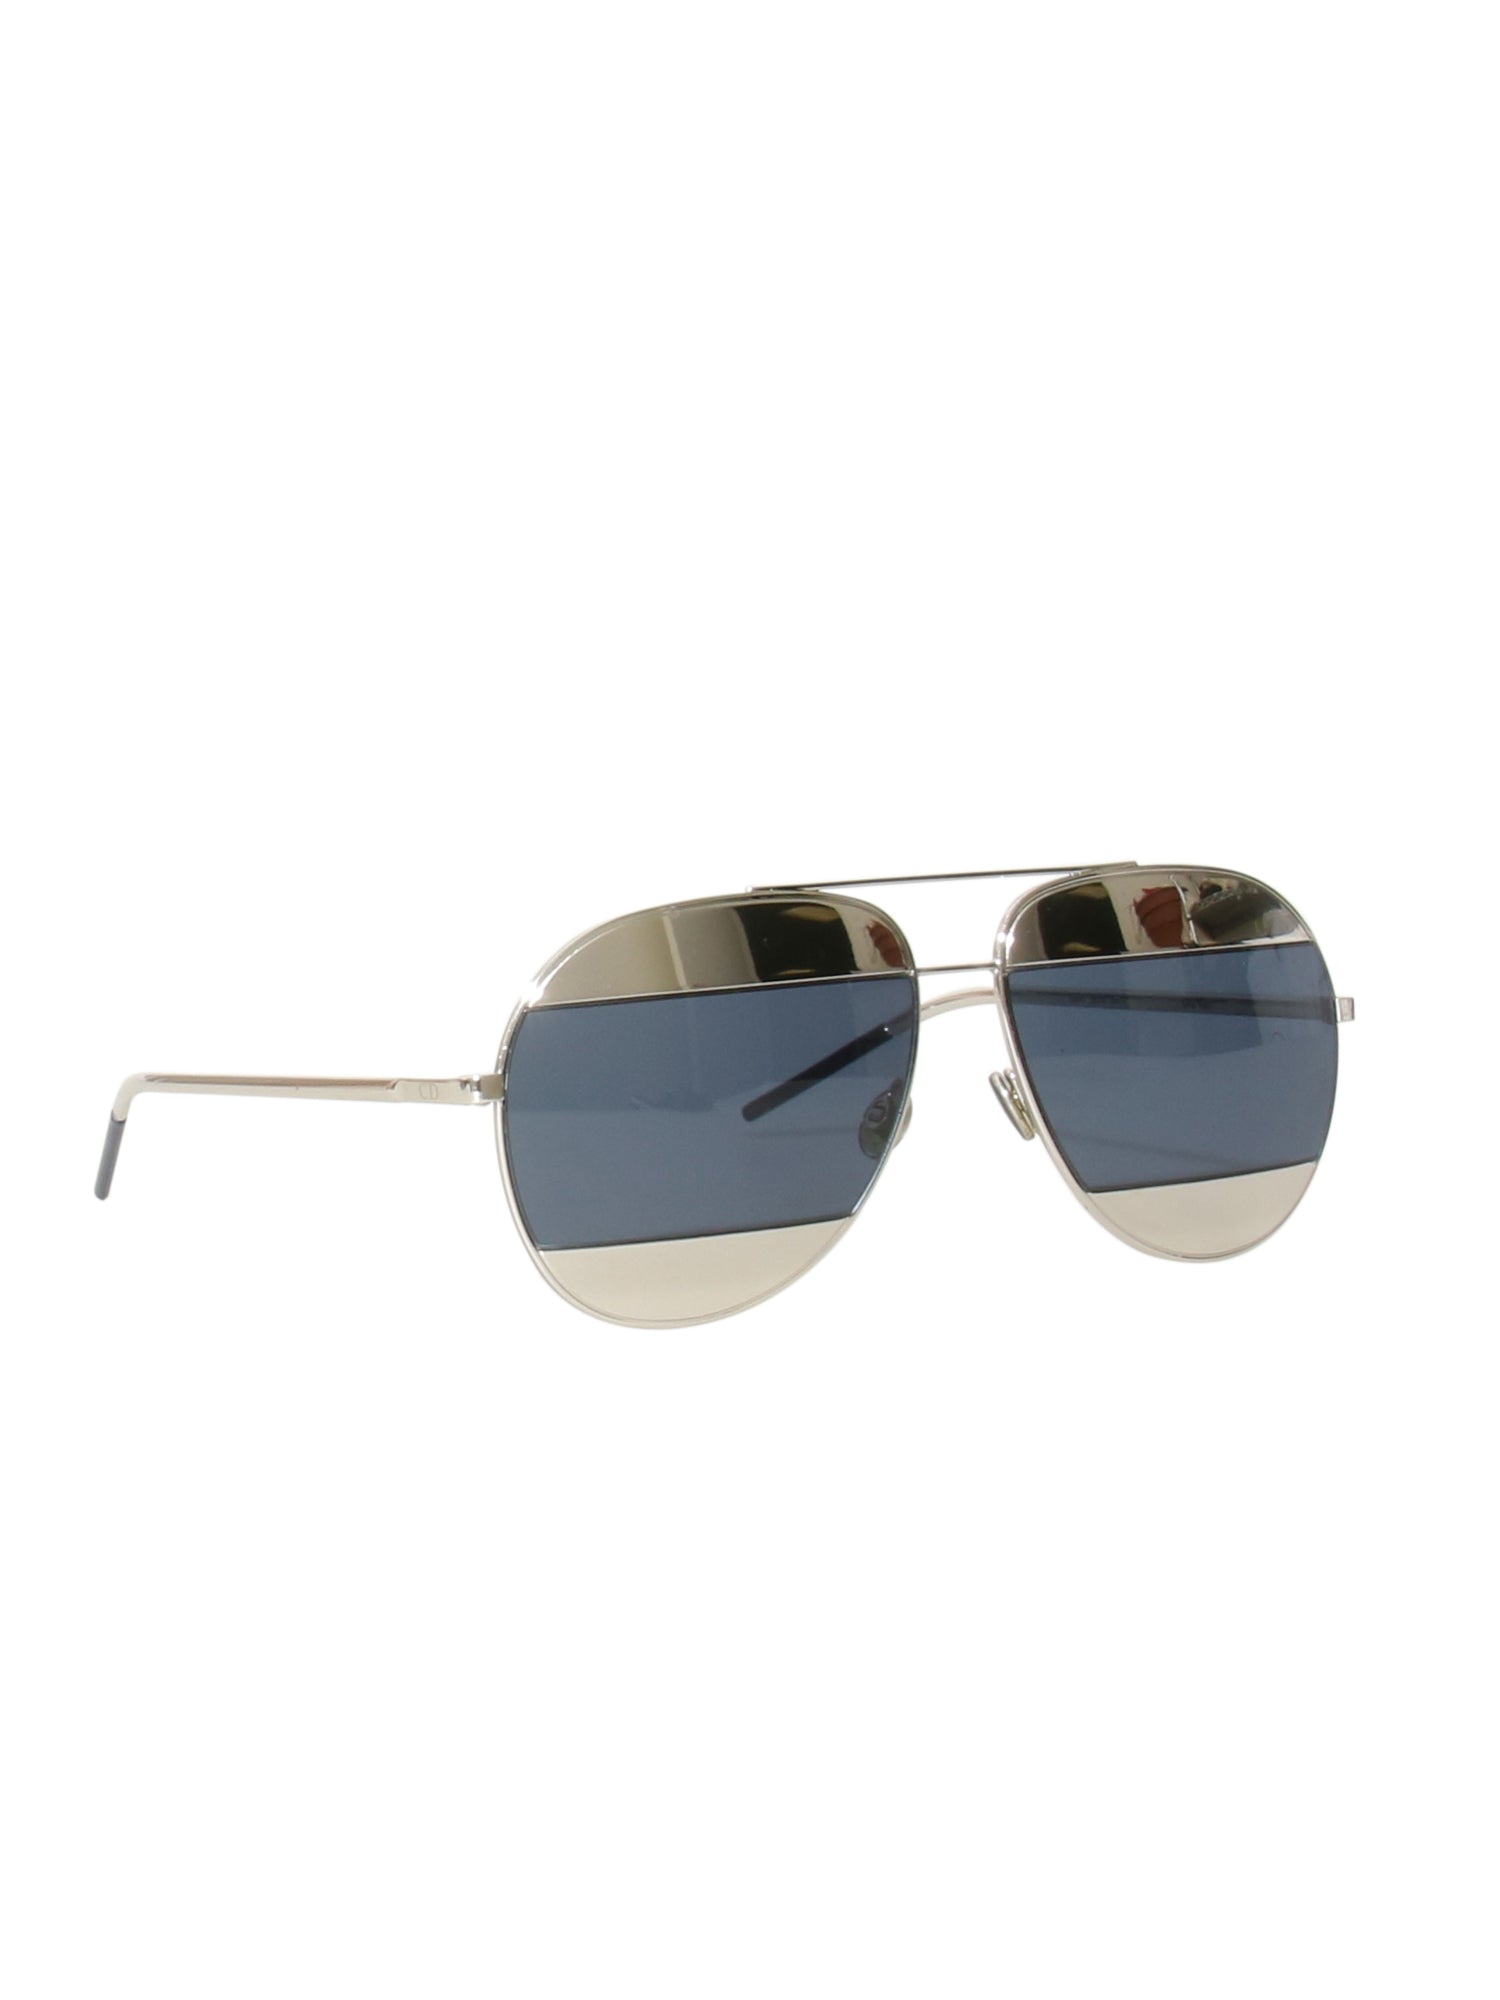 DIOR Revolution 2 Gold Mirrored Metal Aviator Sunglasses 55 mm  Unisex   POTATODO SHOP